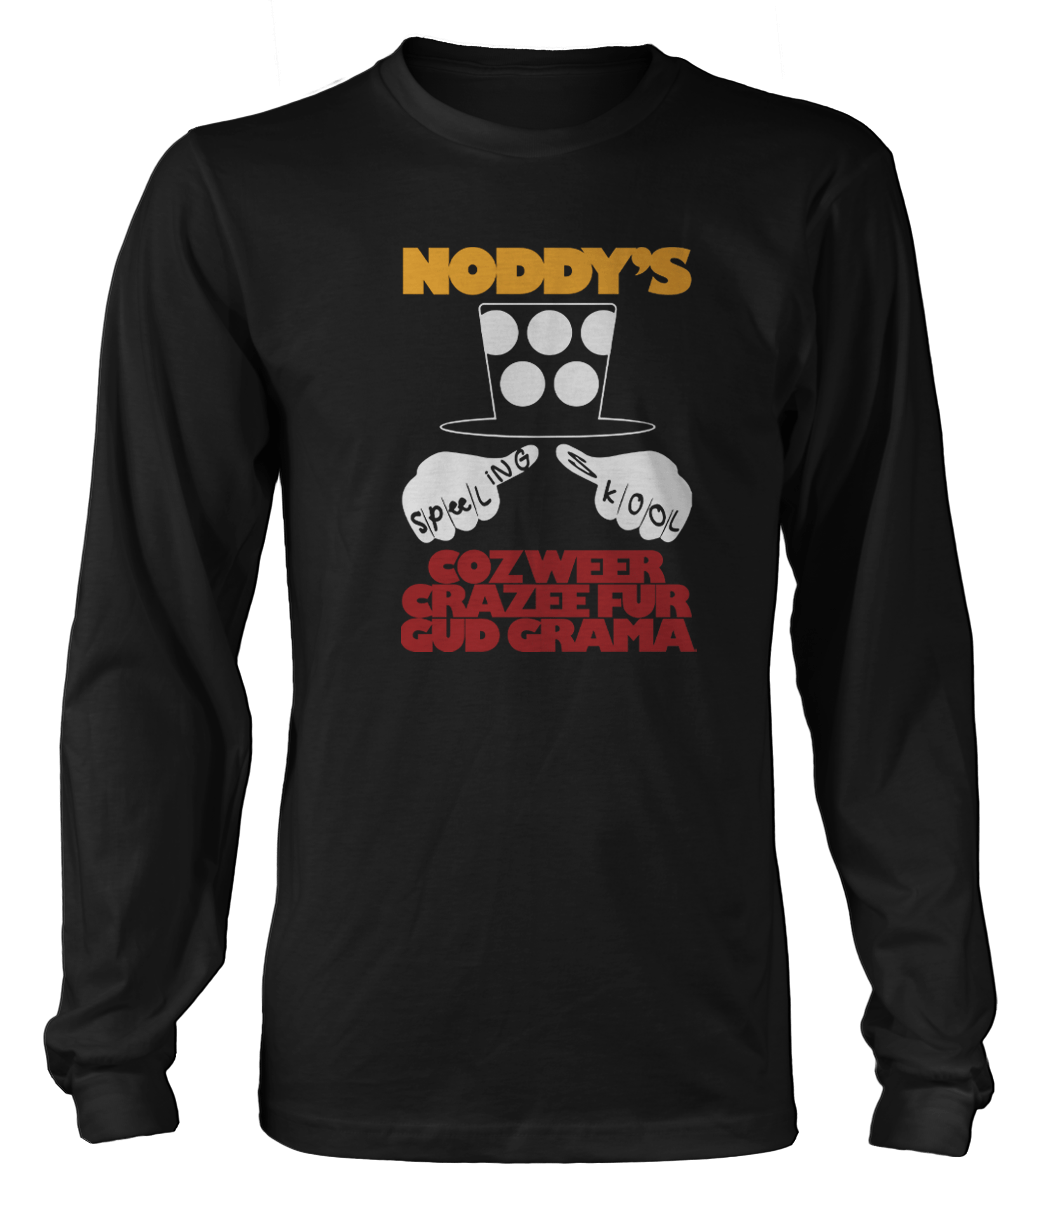 Slade Noddys Speeling Skool inspired T-Shirt | bathroomwall